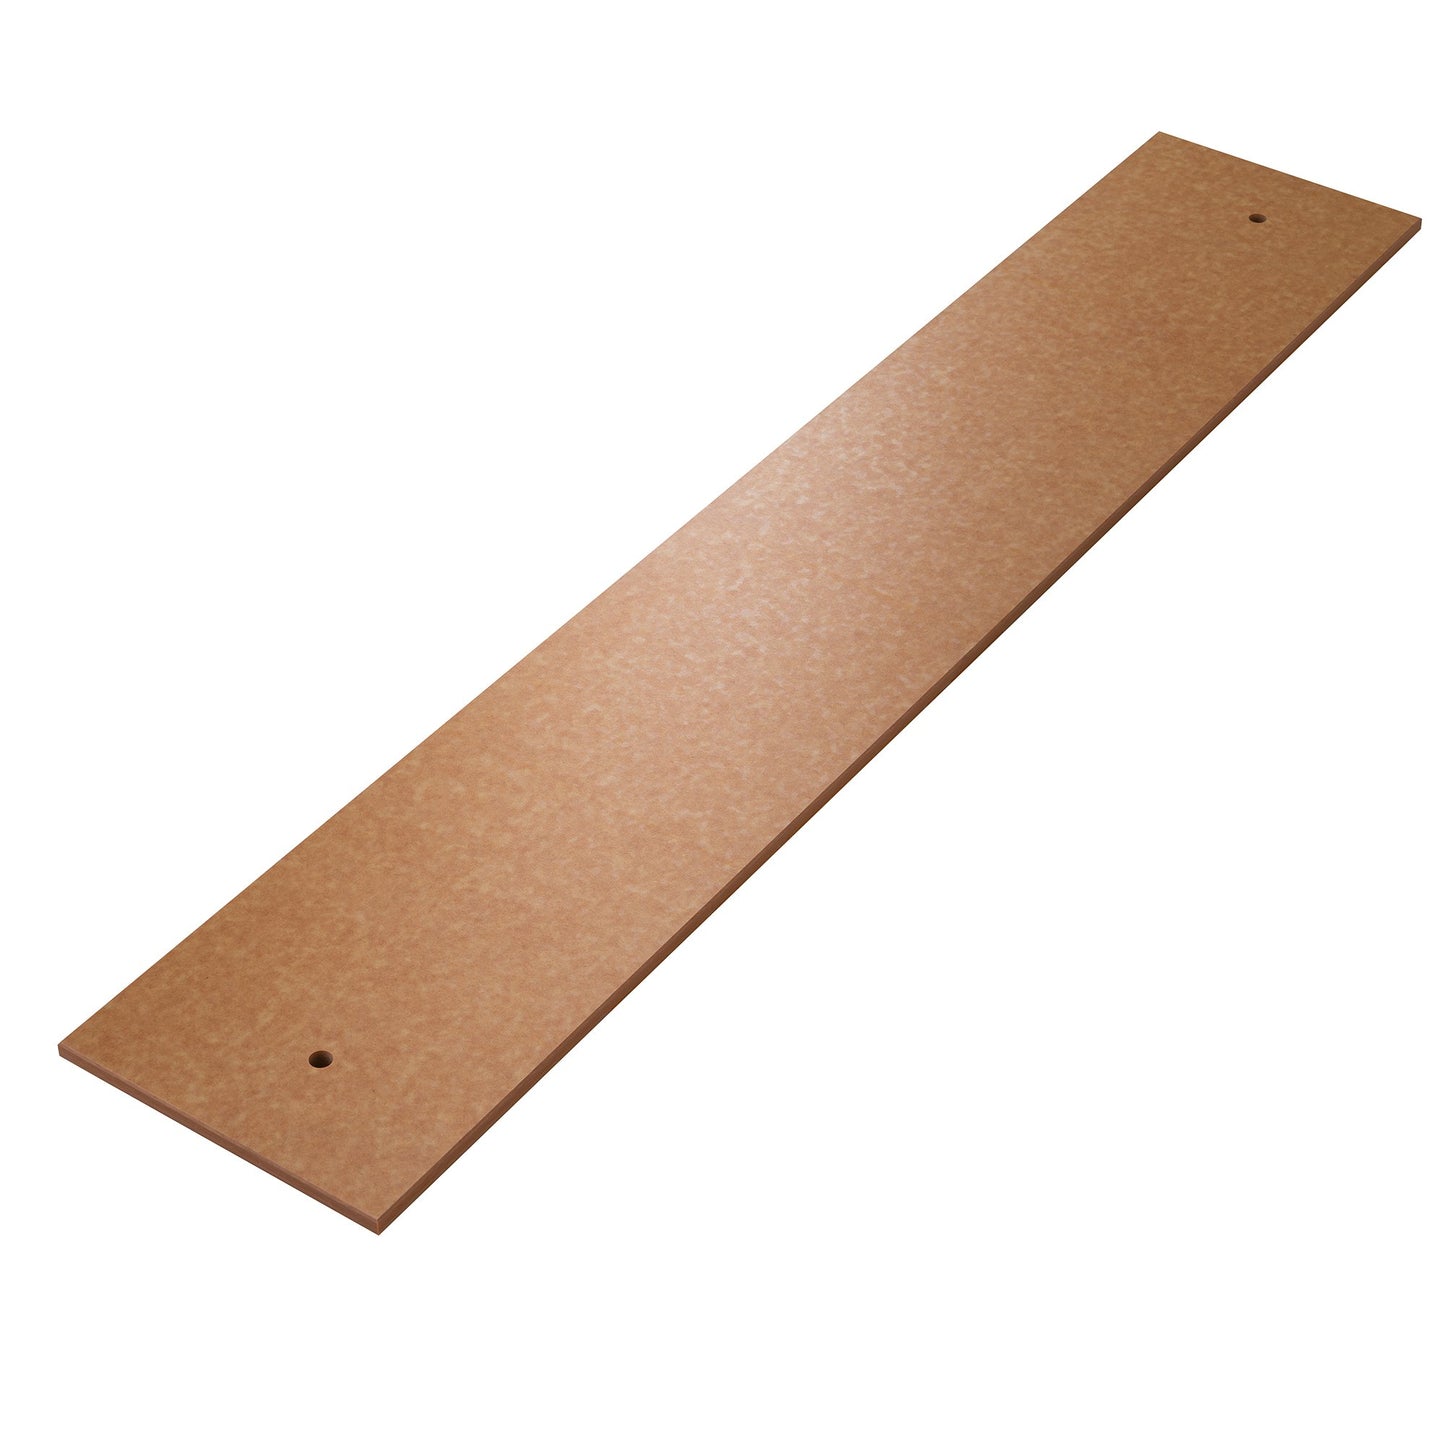 Composite wood-tone cutting board- 1/2" X 11-3/4" X 60-1/4".(SKU - 807778)